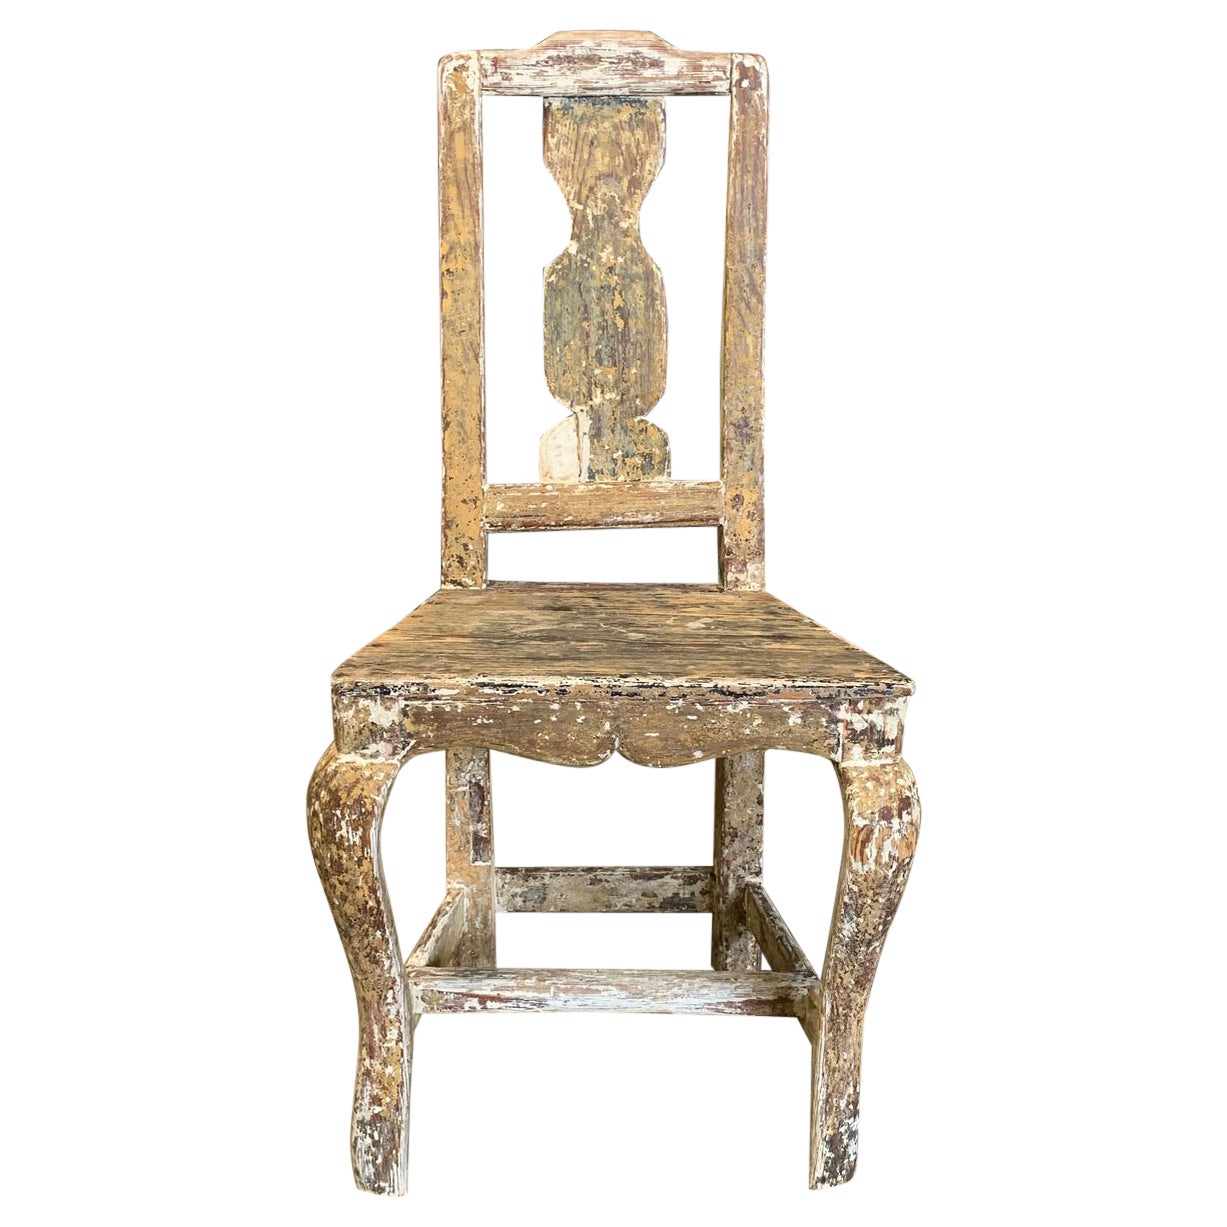 Chaise d'artisanat suédois du XVIIIe siècle